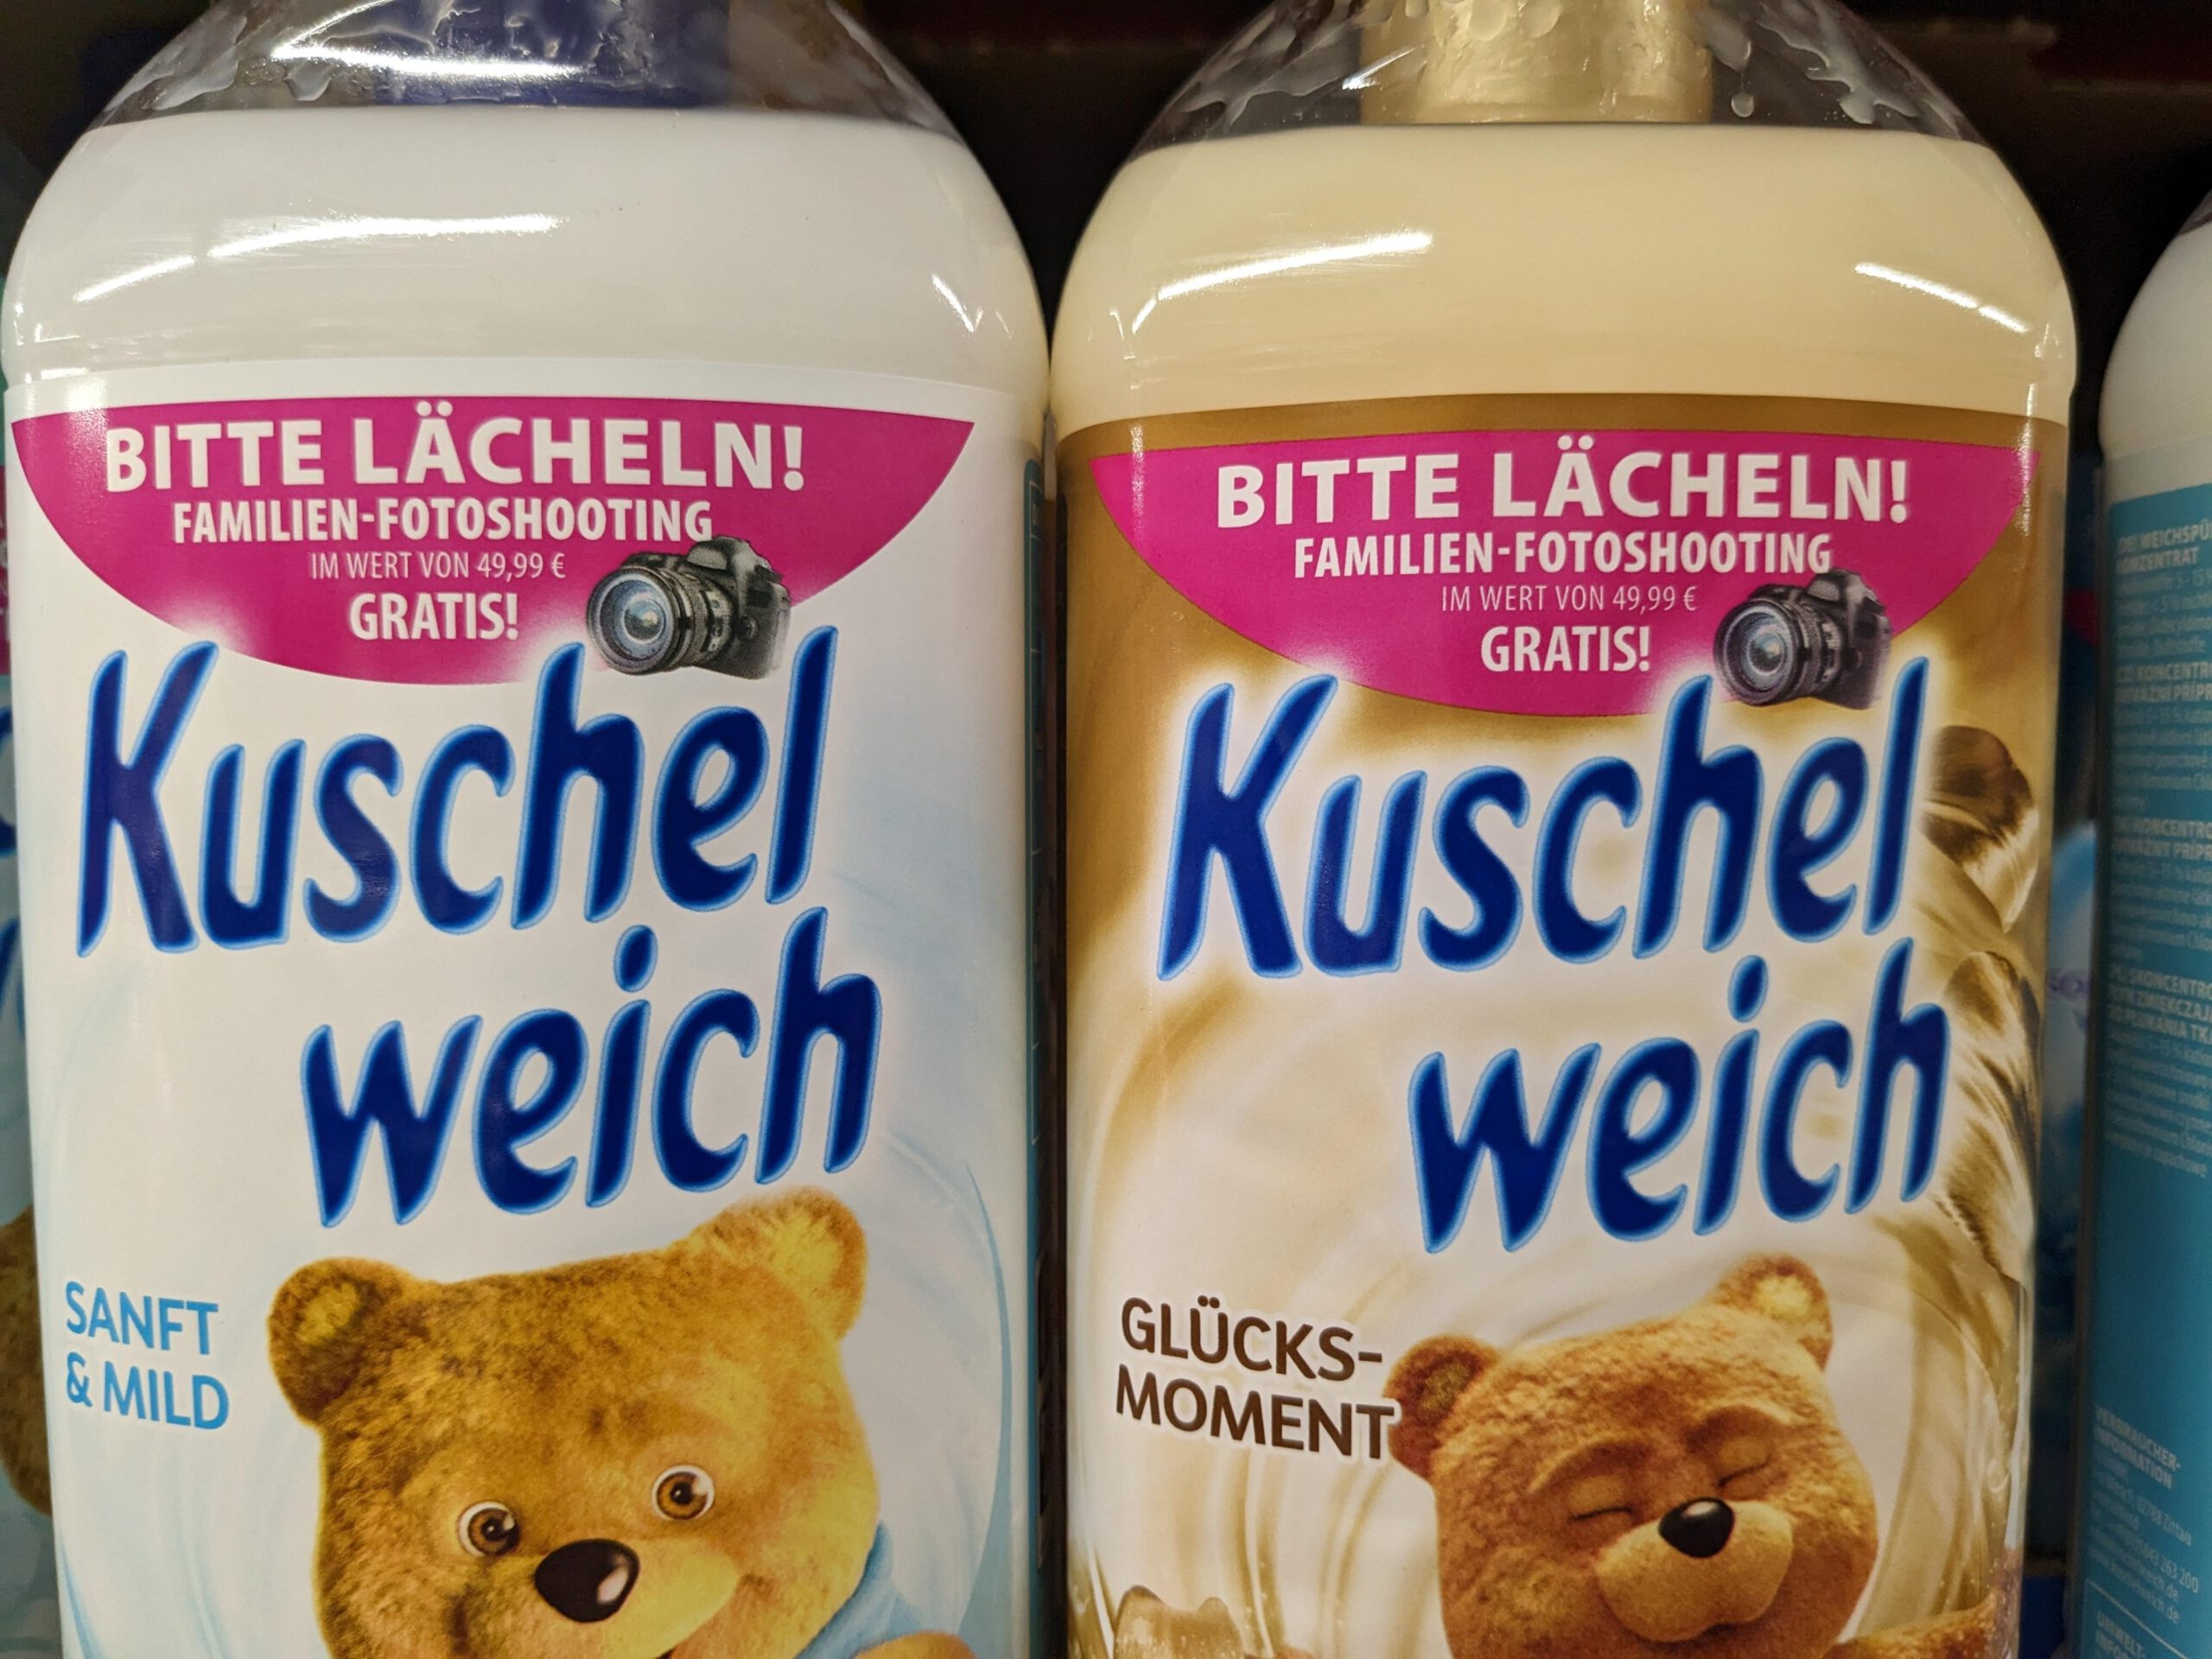 Kuschelweich: Familien-Fotoshooting gratis